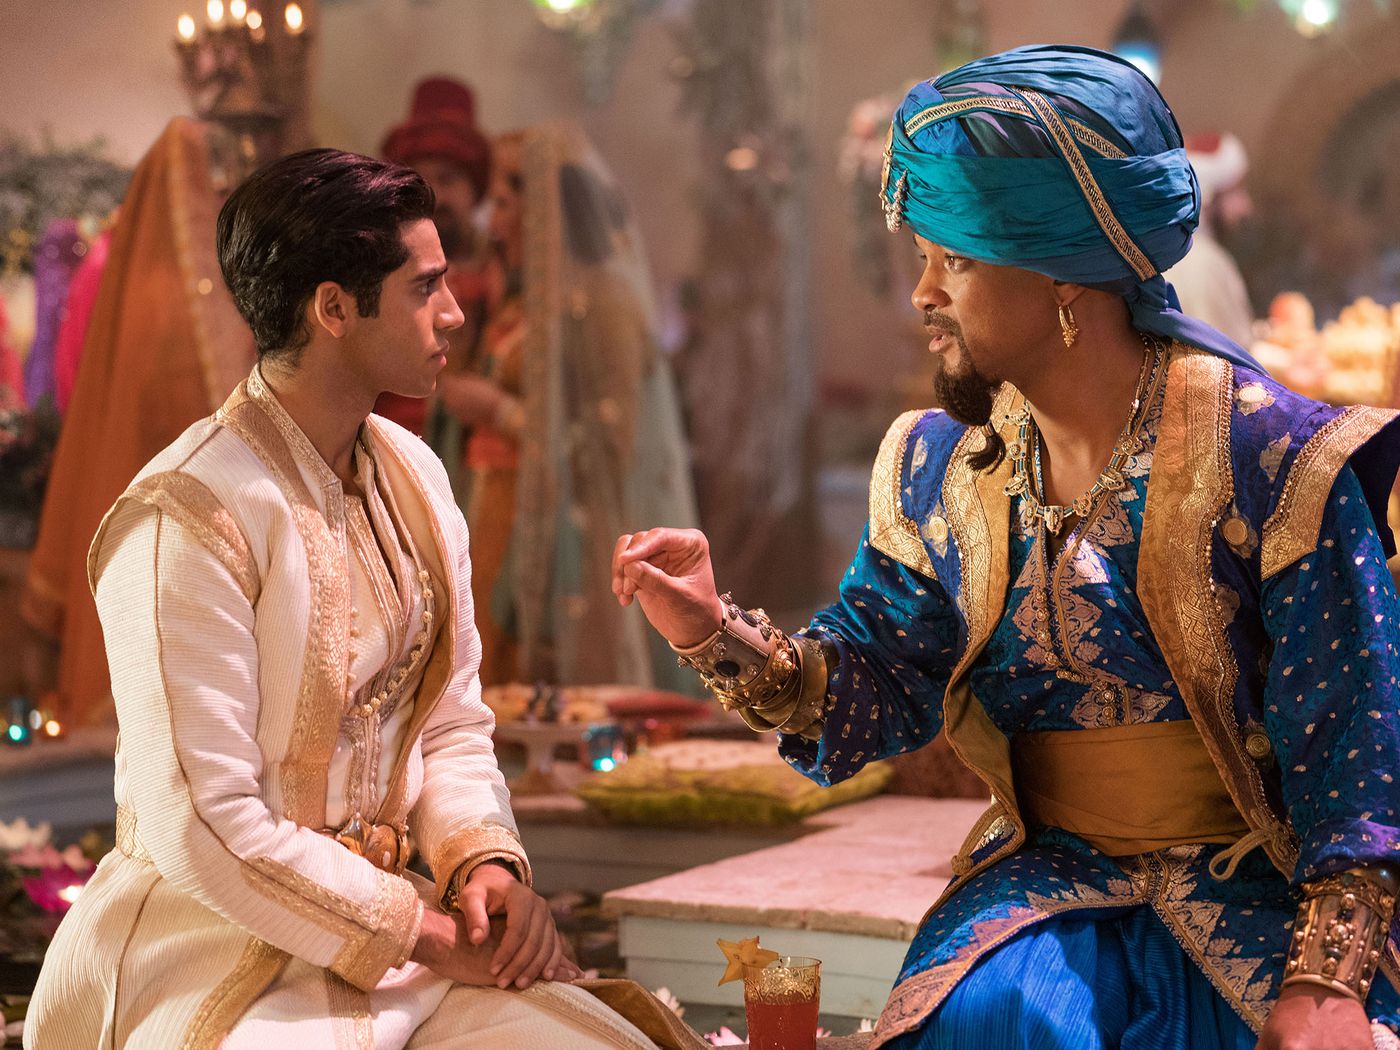 Review: Disney's Live Action Aladdin Is Half Charming, Half Dreadful